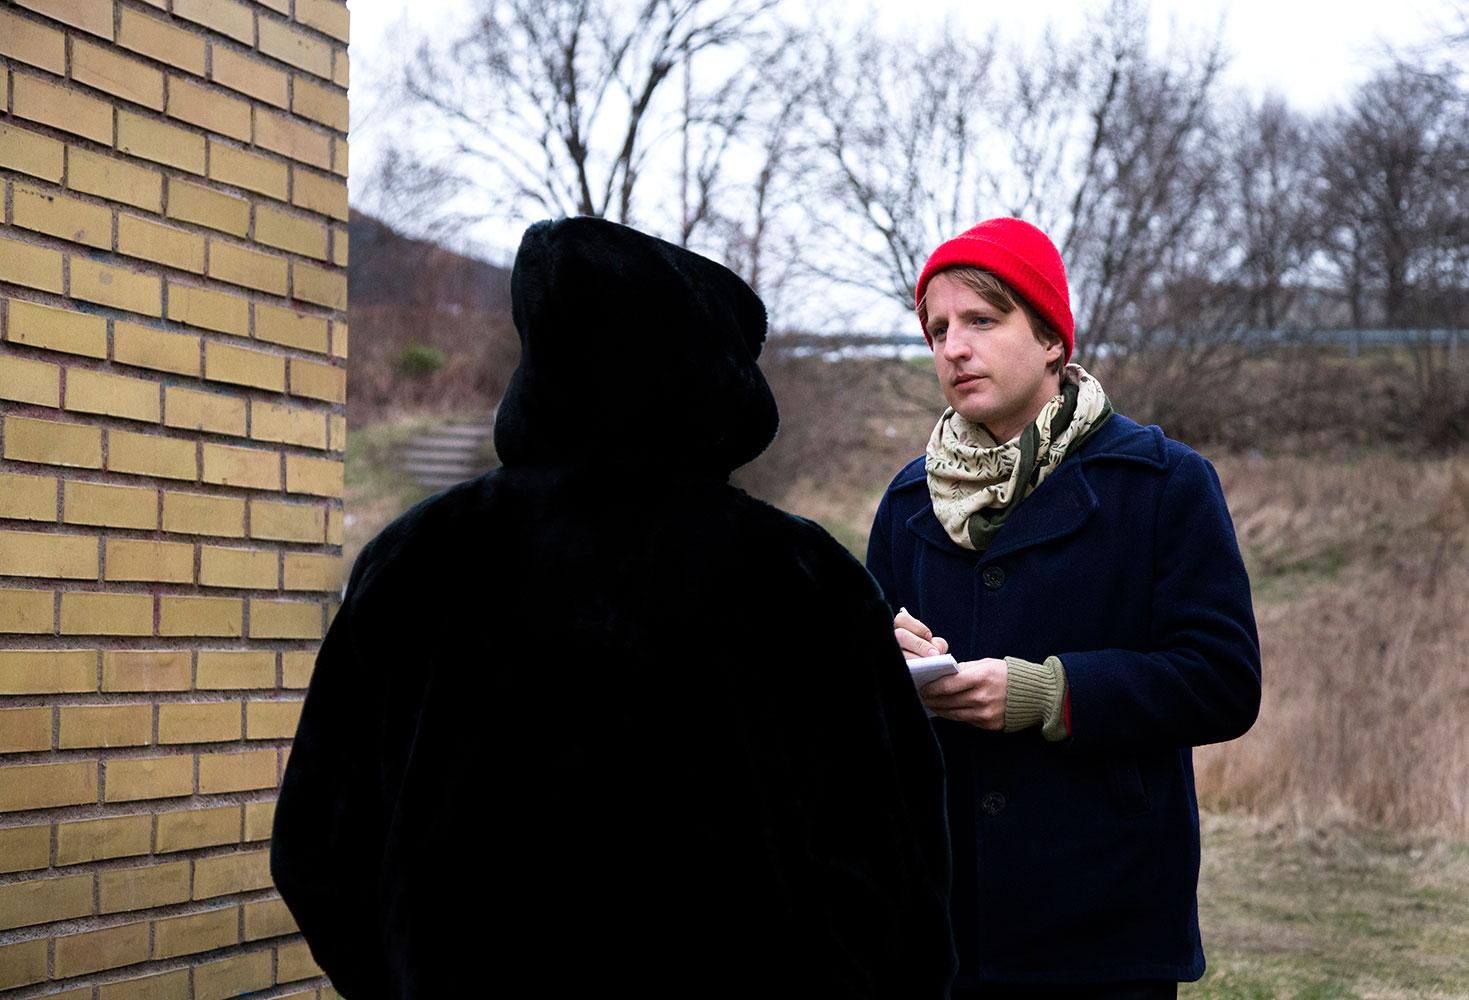 Aftonbladets reportern Olof Svensson intervjuar vittnet.